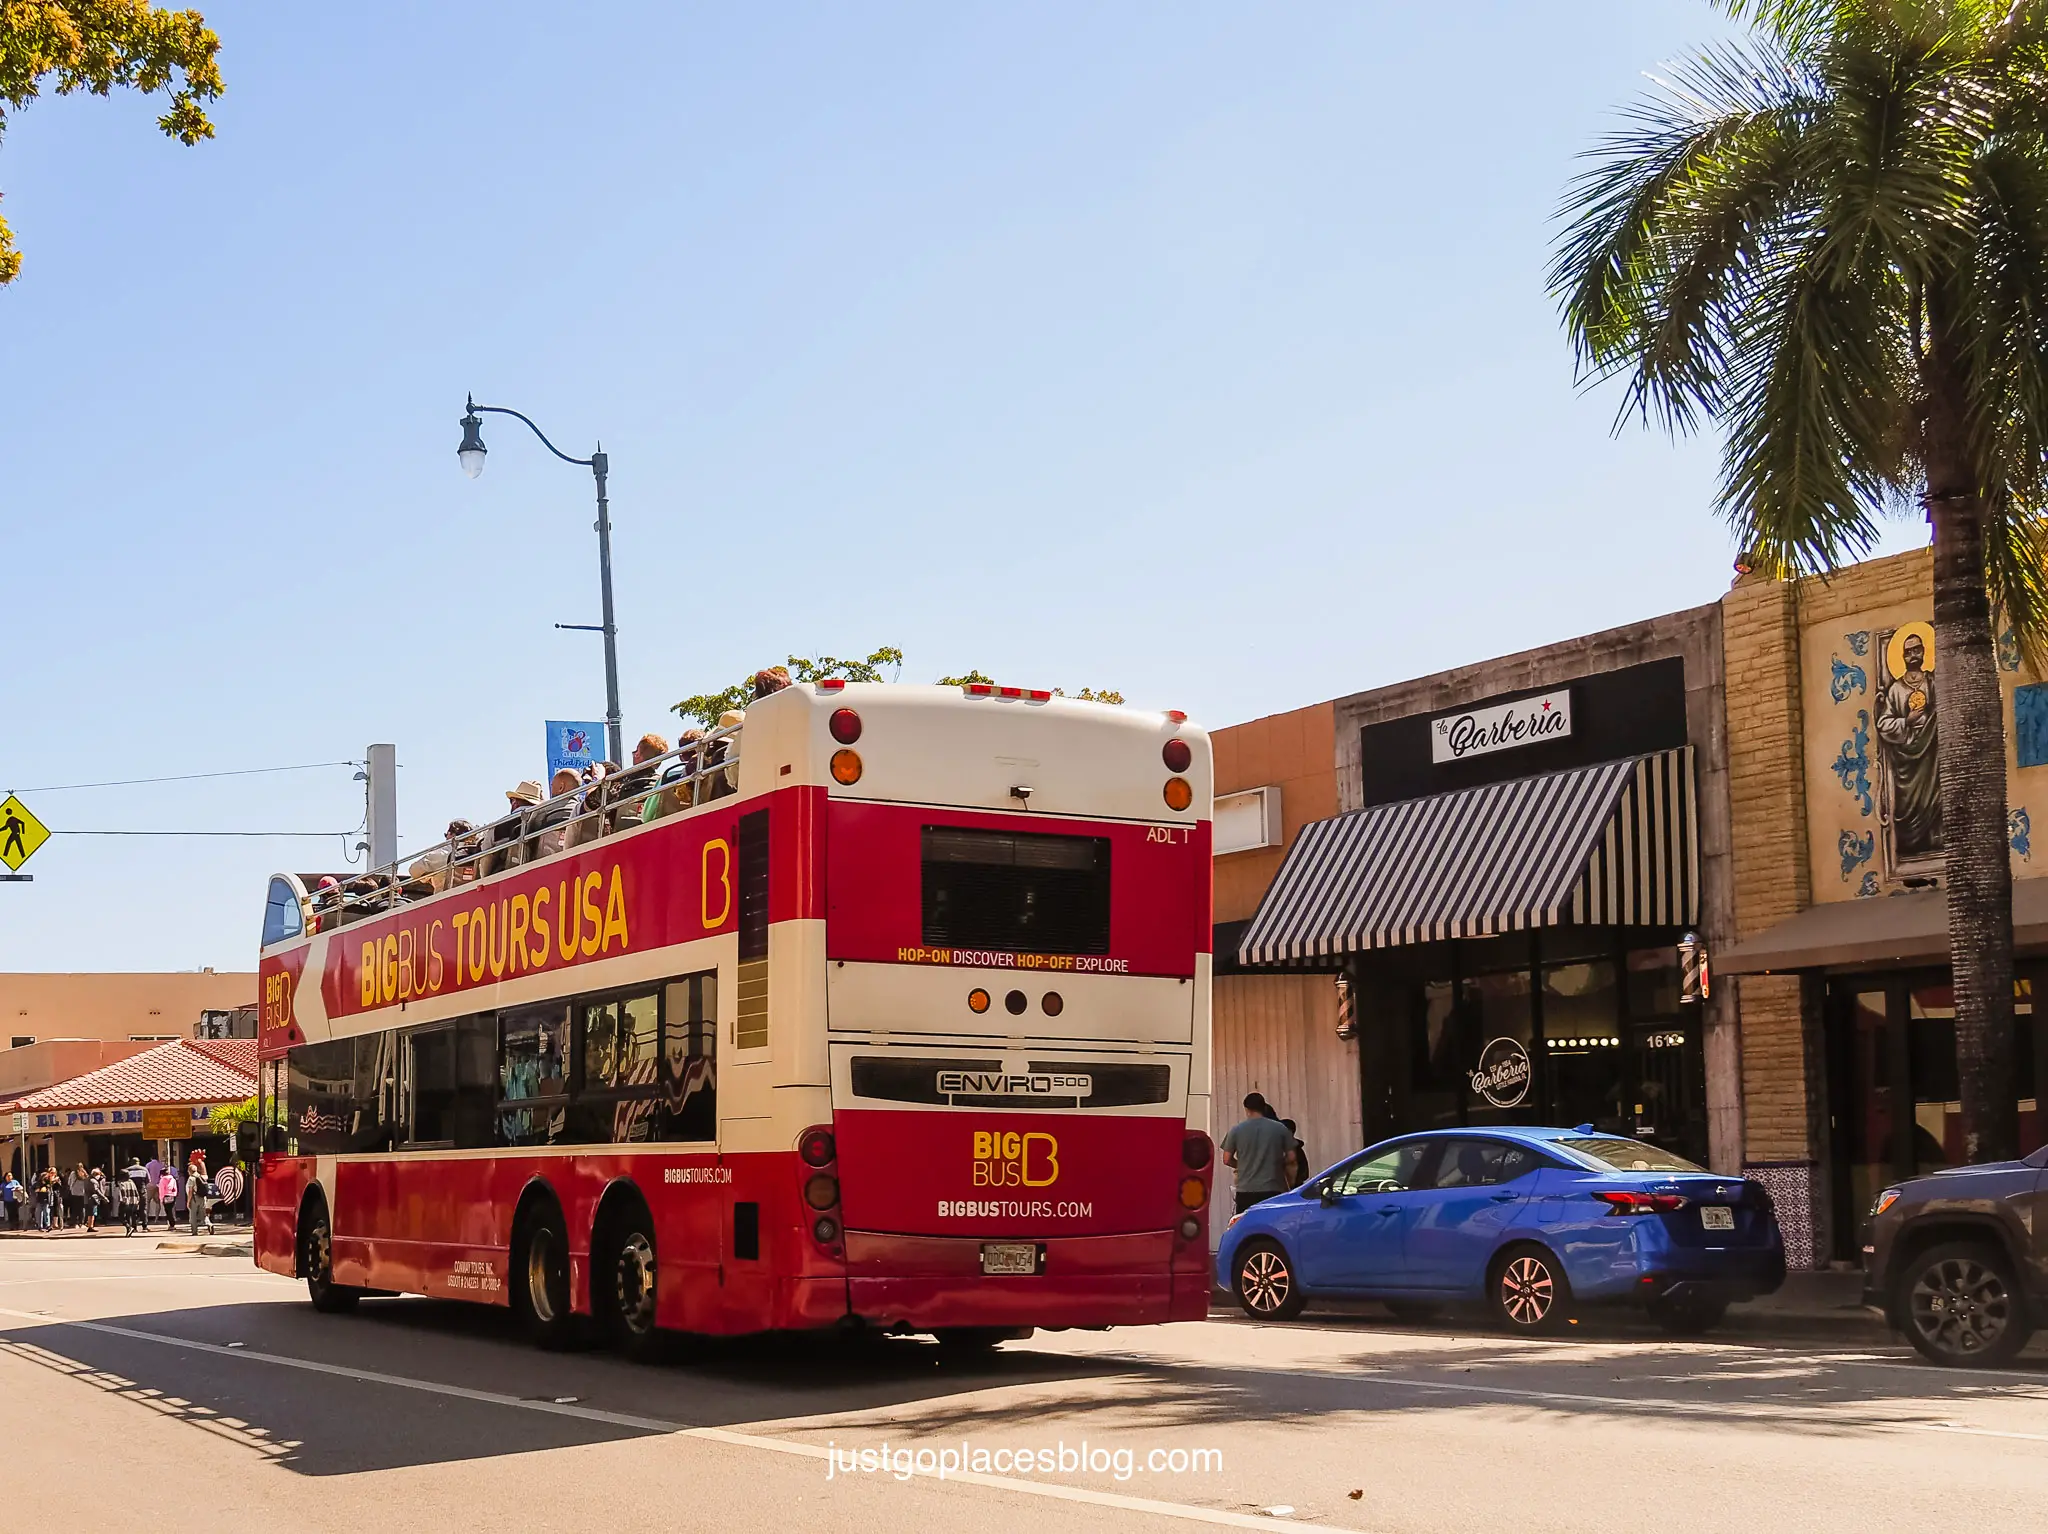 Big Bus Tours also do tours in Little Havana